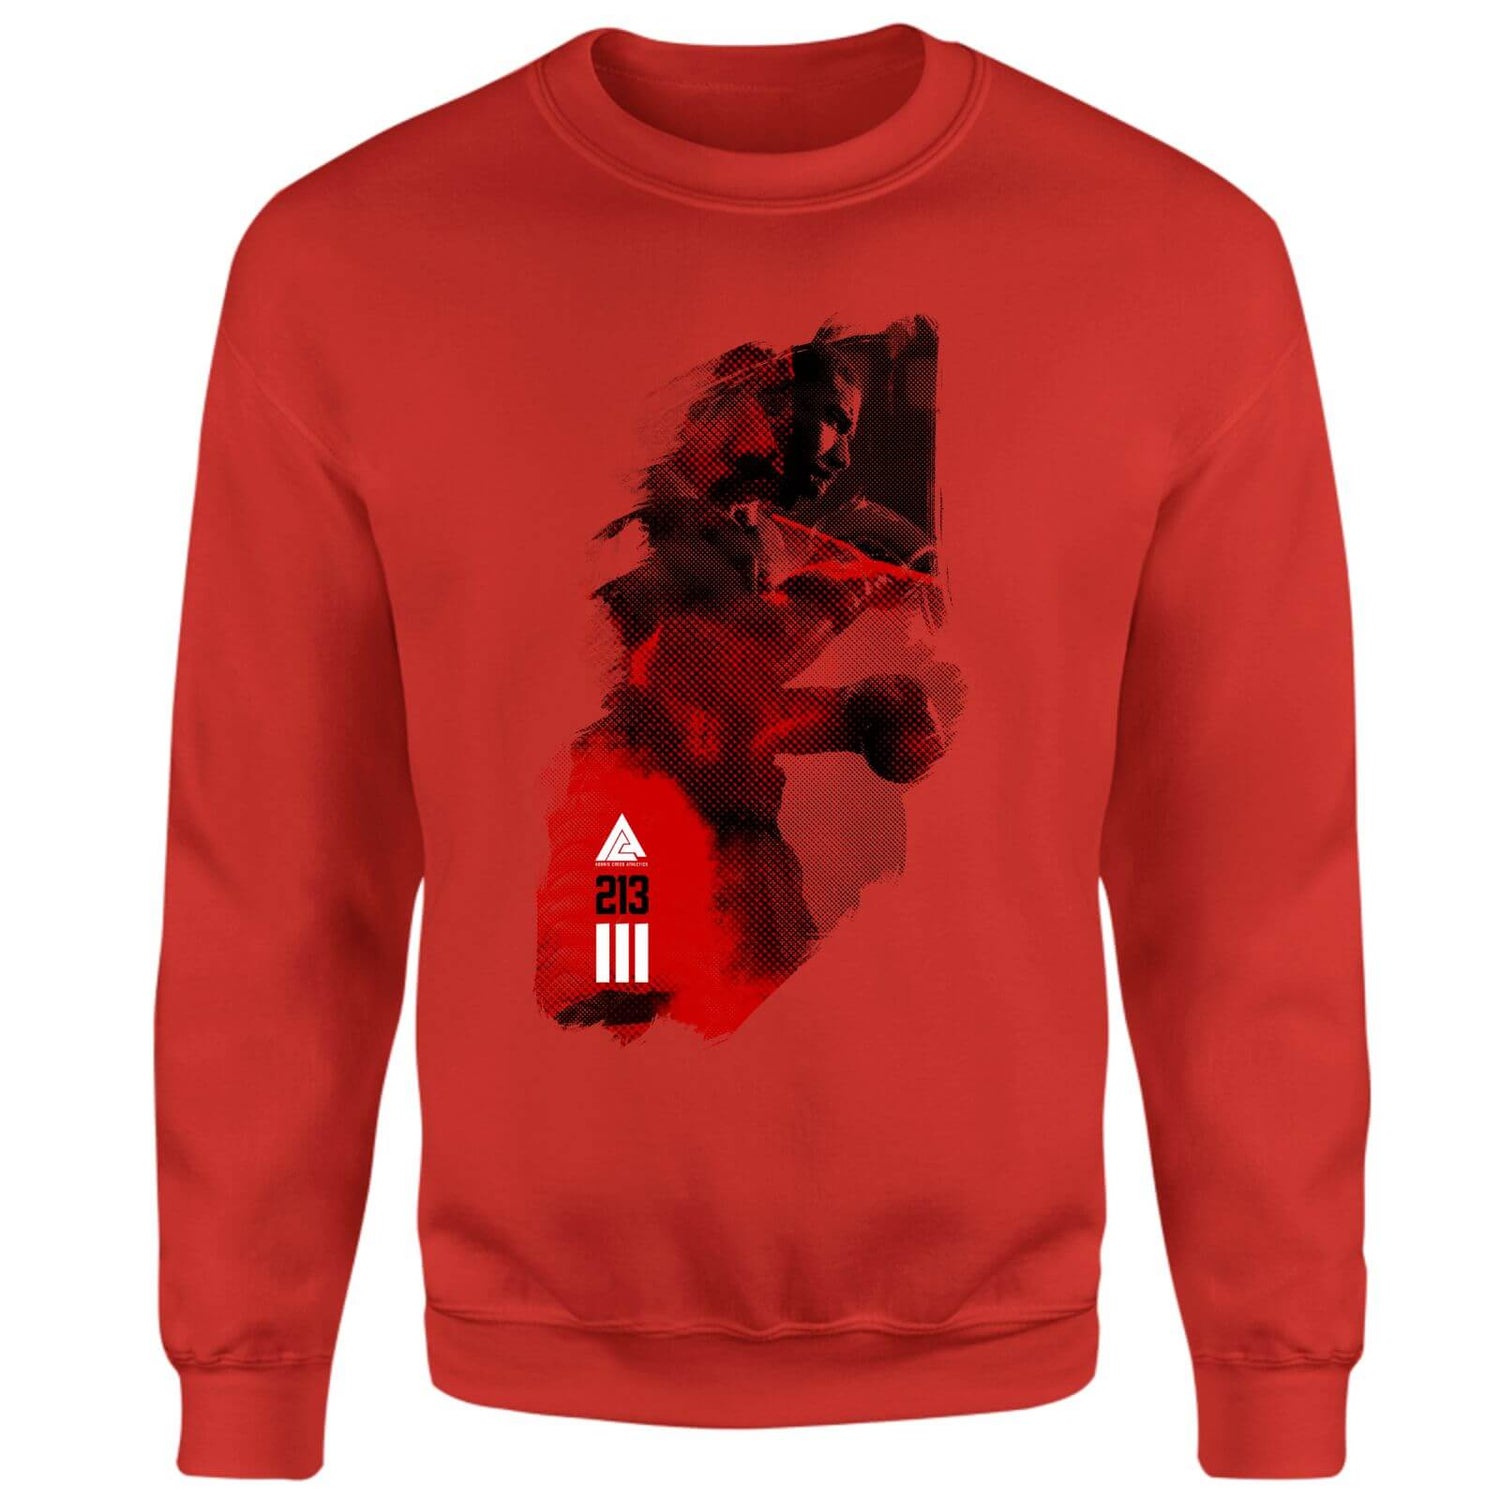 Creed 213 Sweatshirt - Red